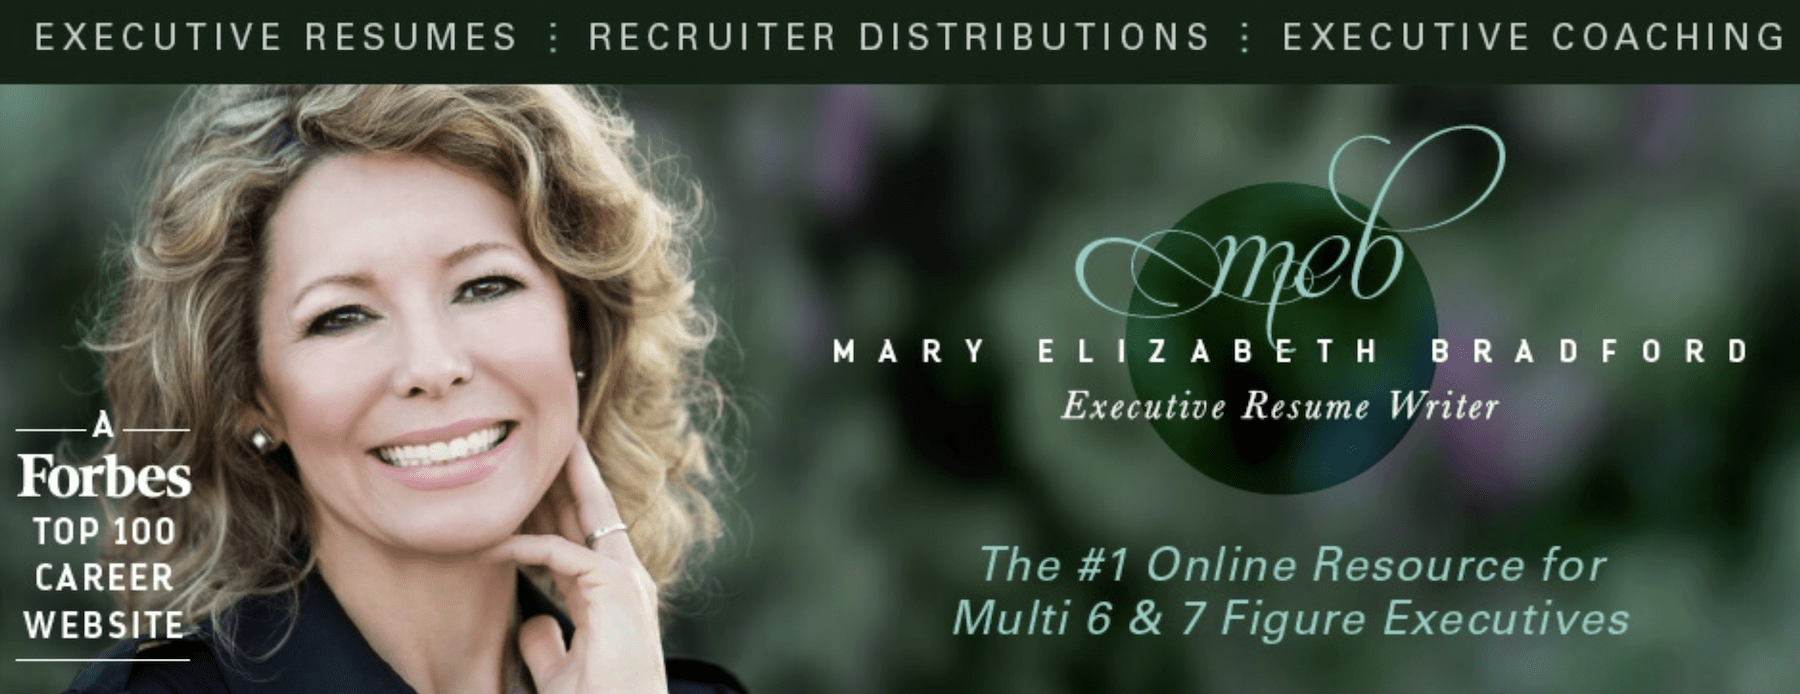 Mary Elizabeth Bradford - Reviews